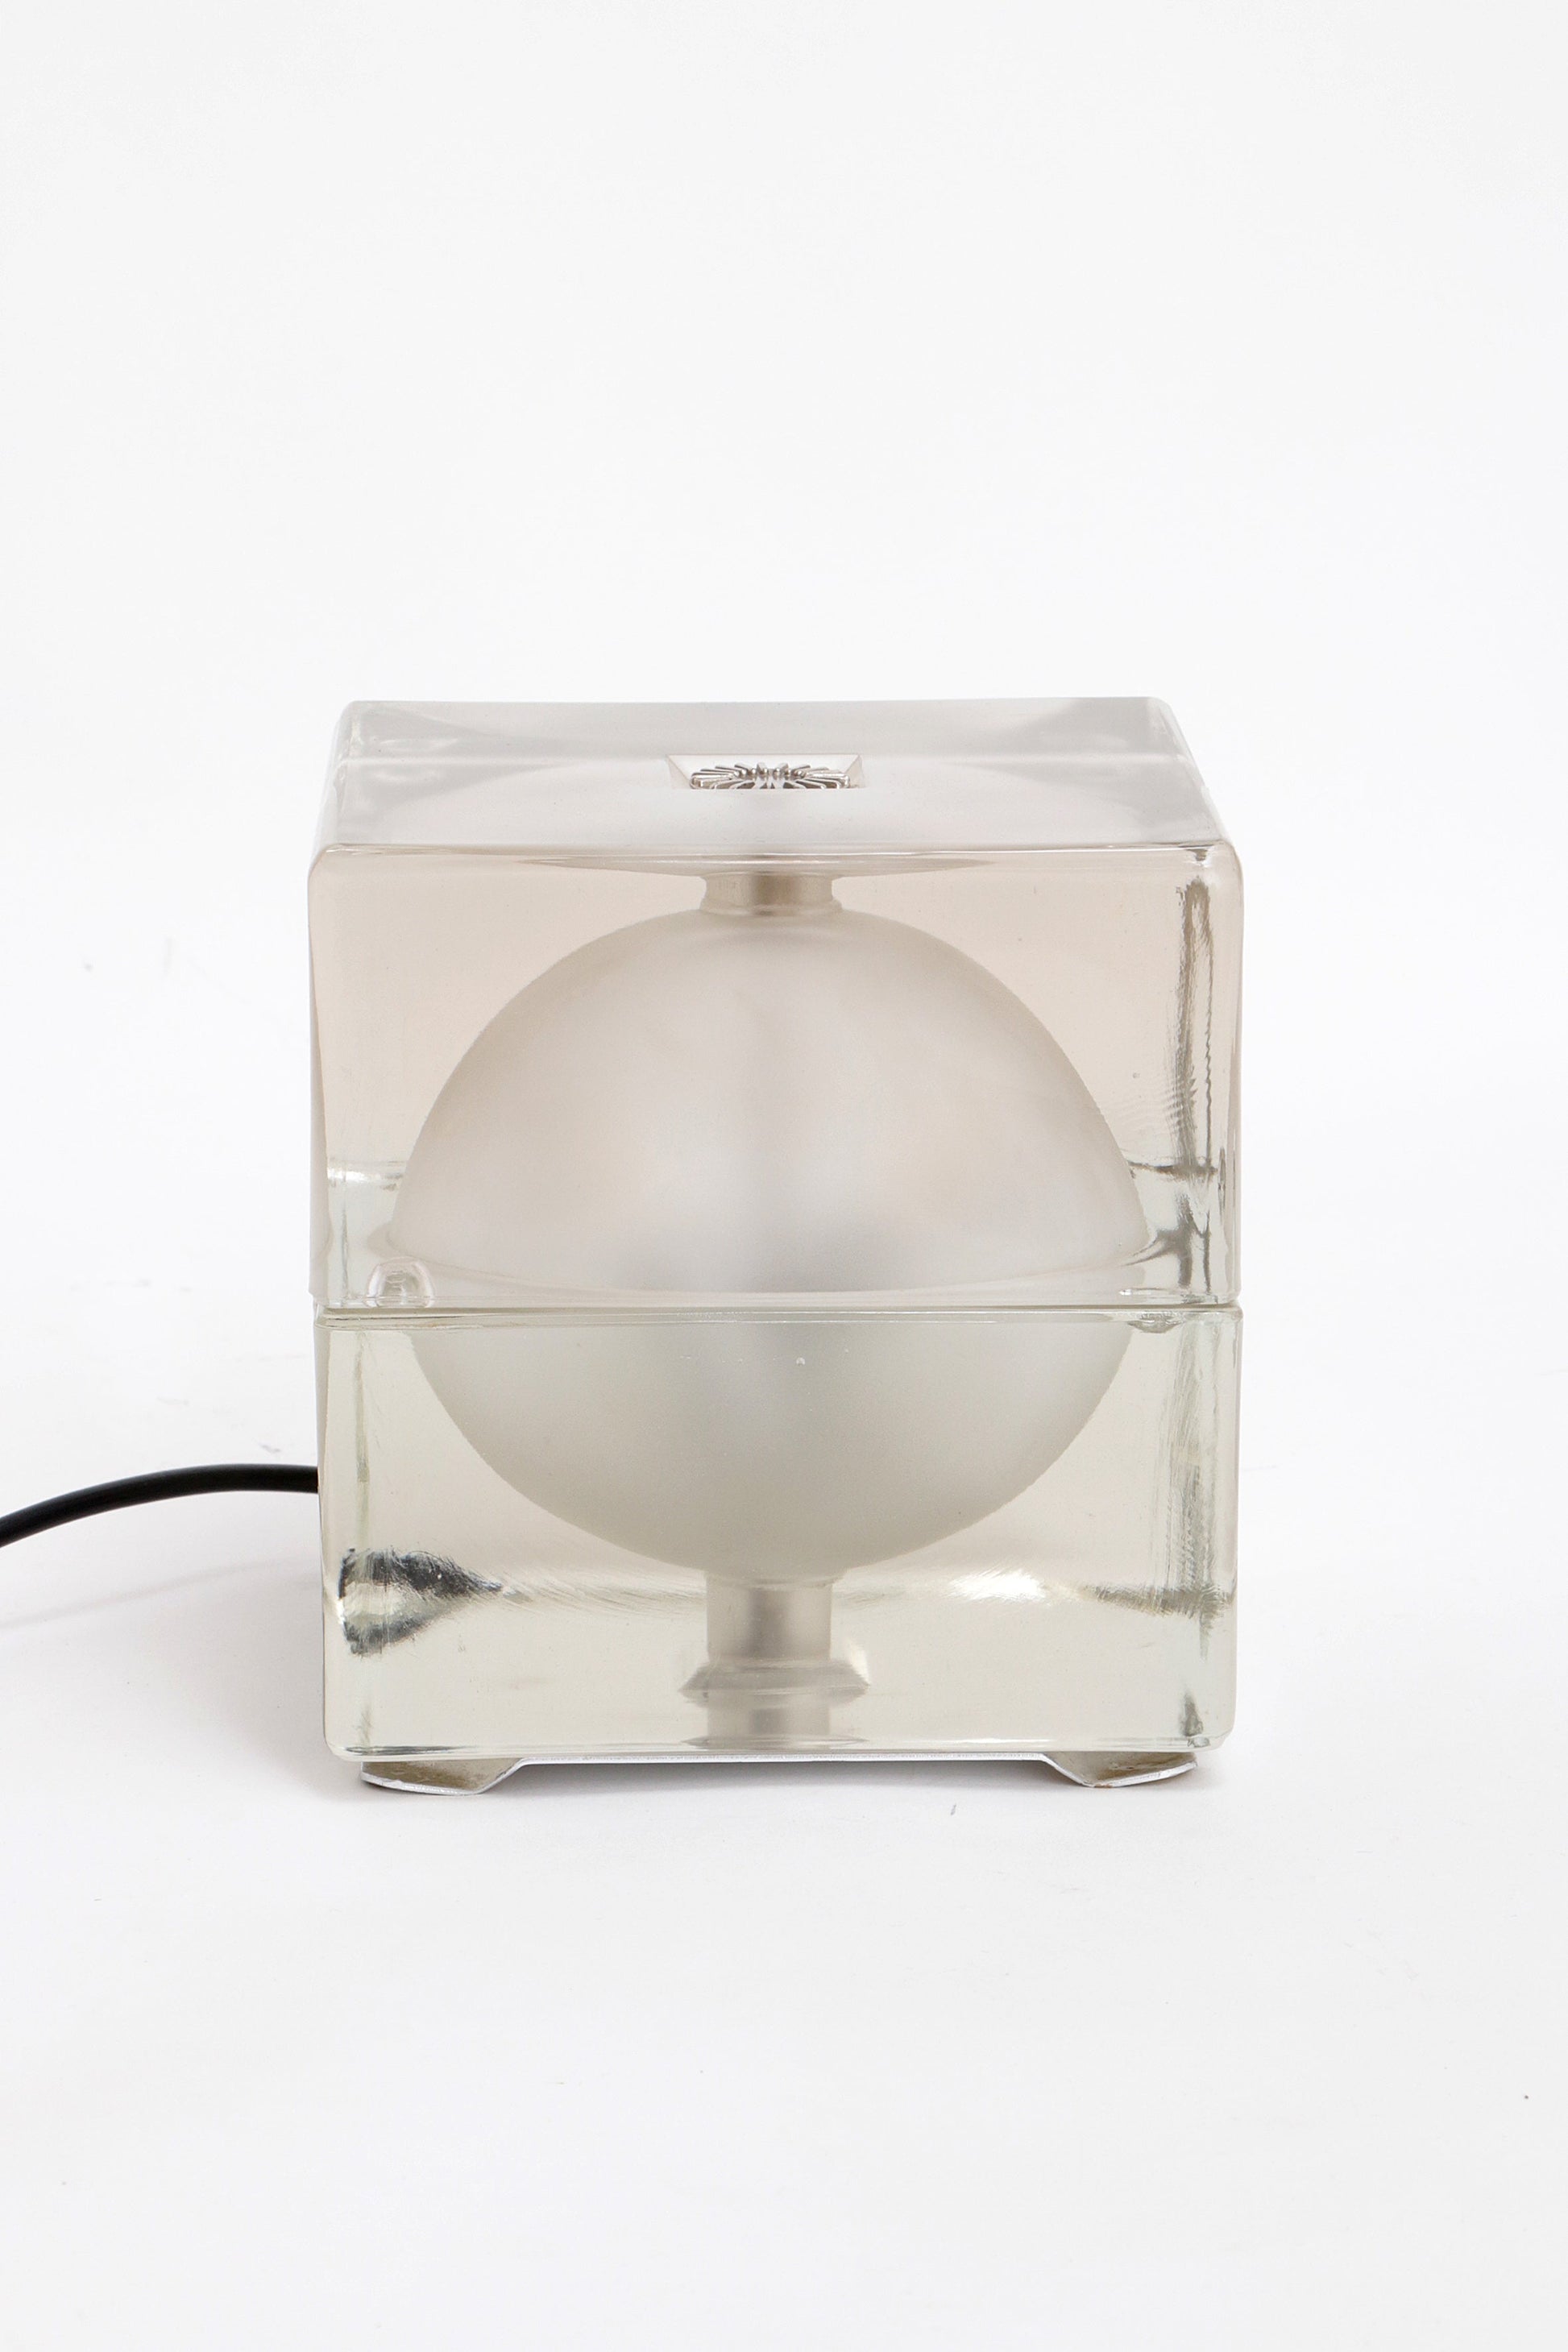 Alessandro Mendini “Cubosfera” Table Lamp Metal Crome Glass 1968 Italy